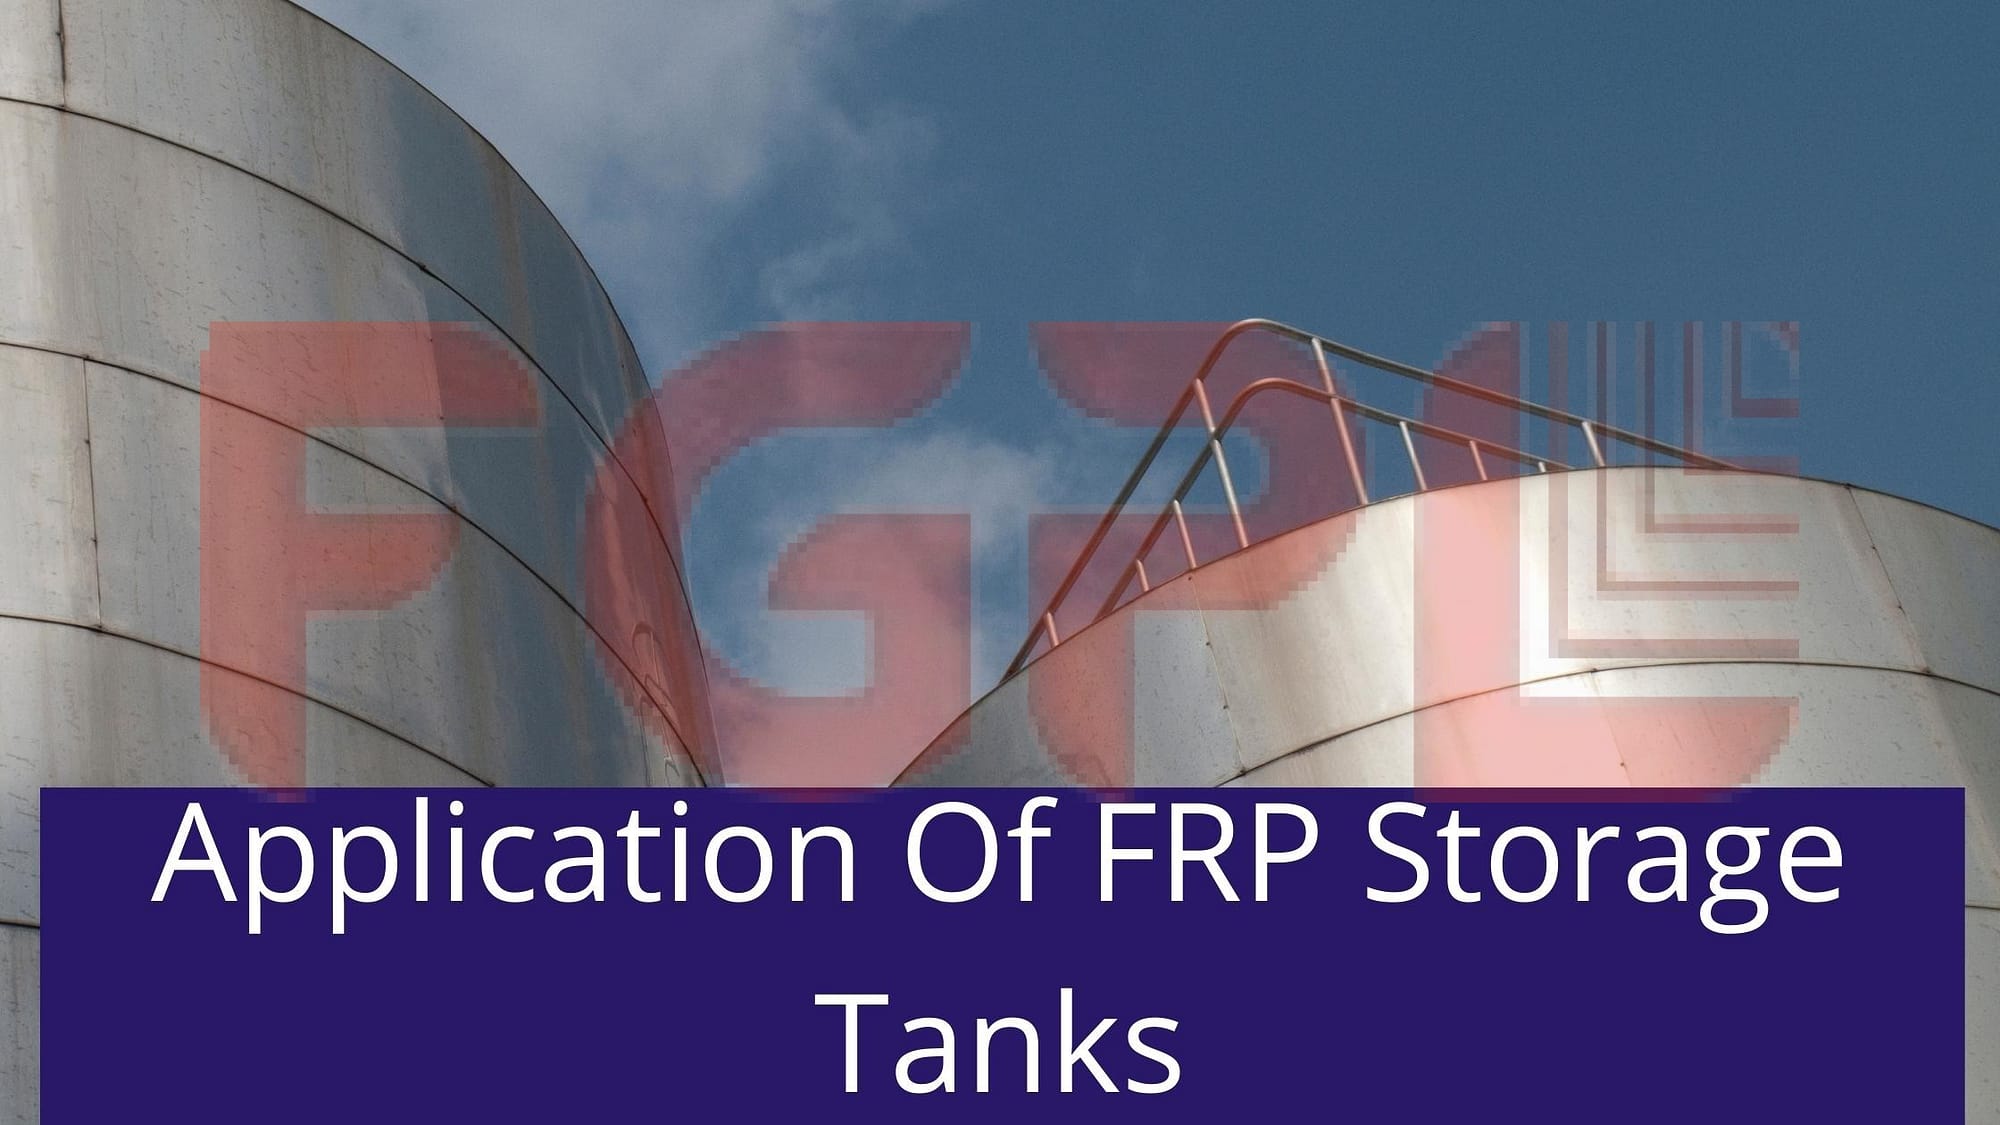 Application Of FRP Storage Tanks